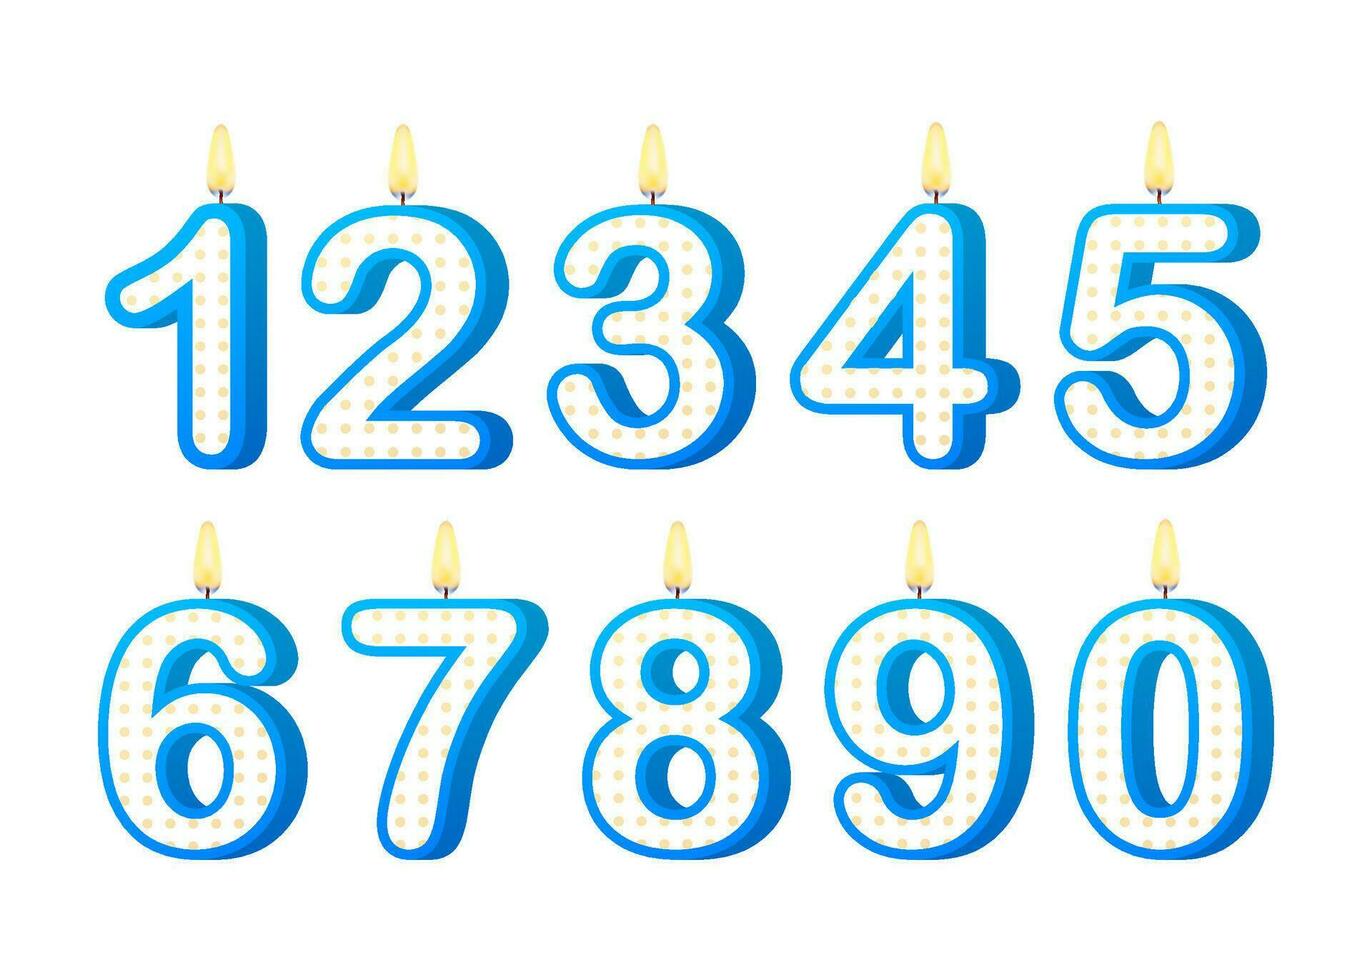 reeks van gelukkig verjaardag kaars nummers. vector voorraad illustratie